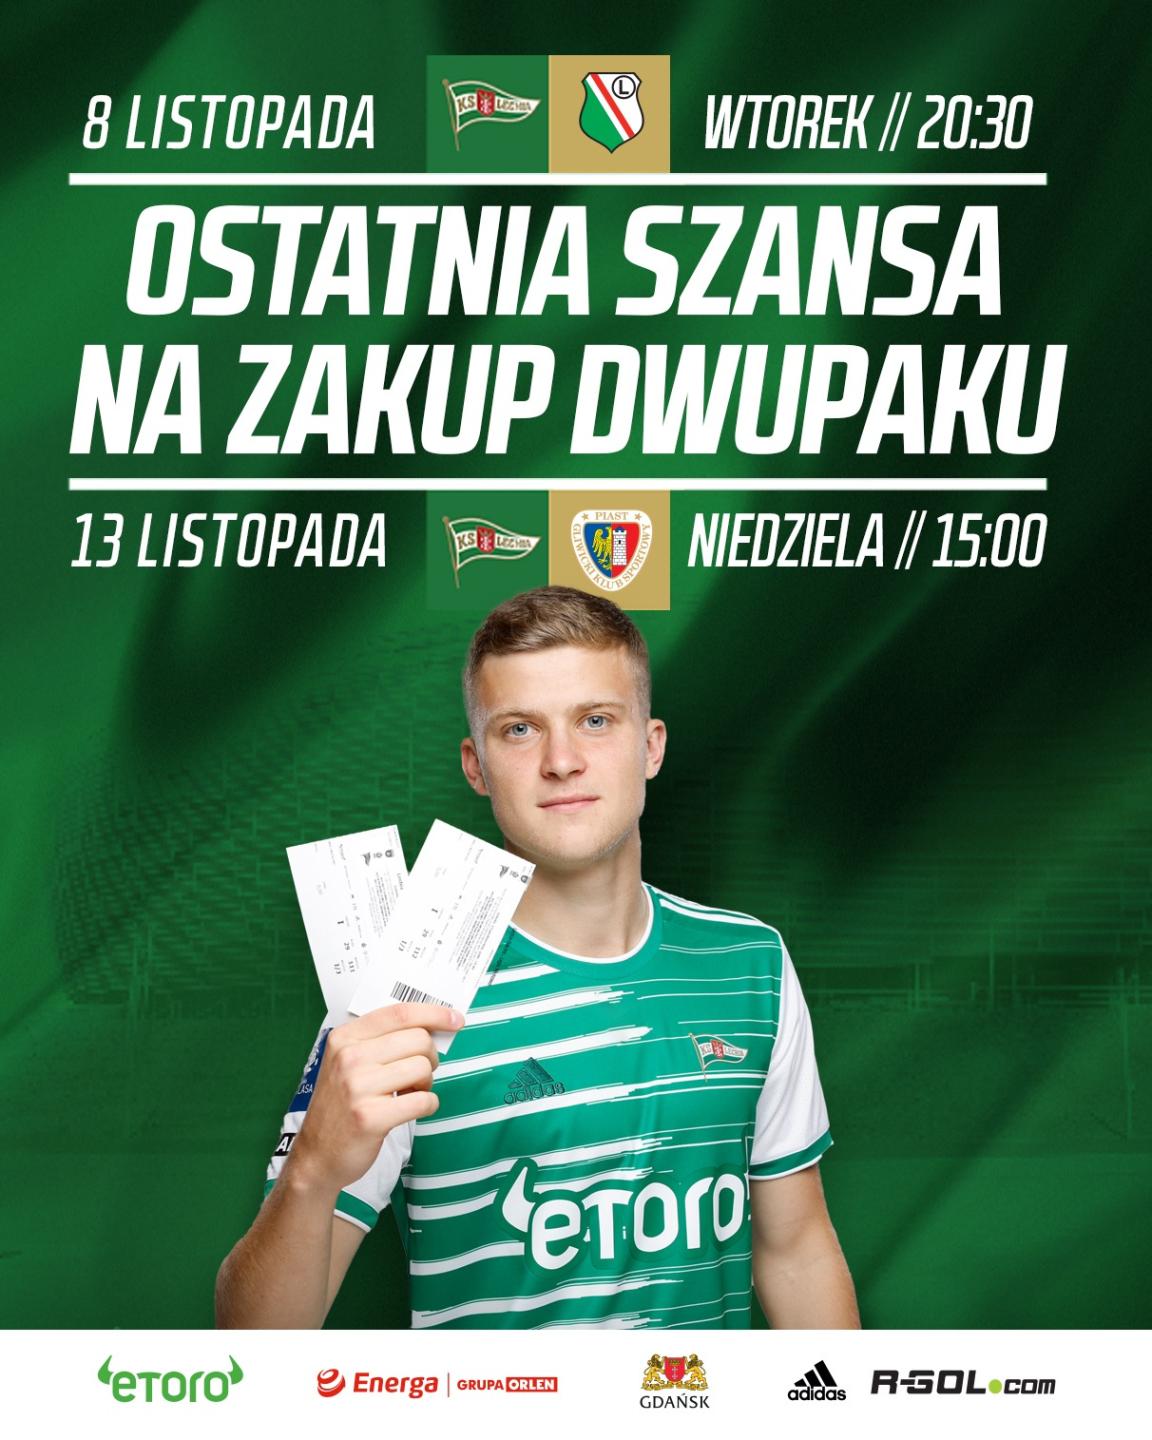 Lechia Gdańsk - Legia Warszawa 2:2, k. 2-4 (08.11.2022)